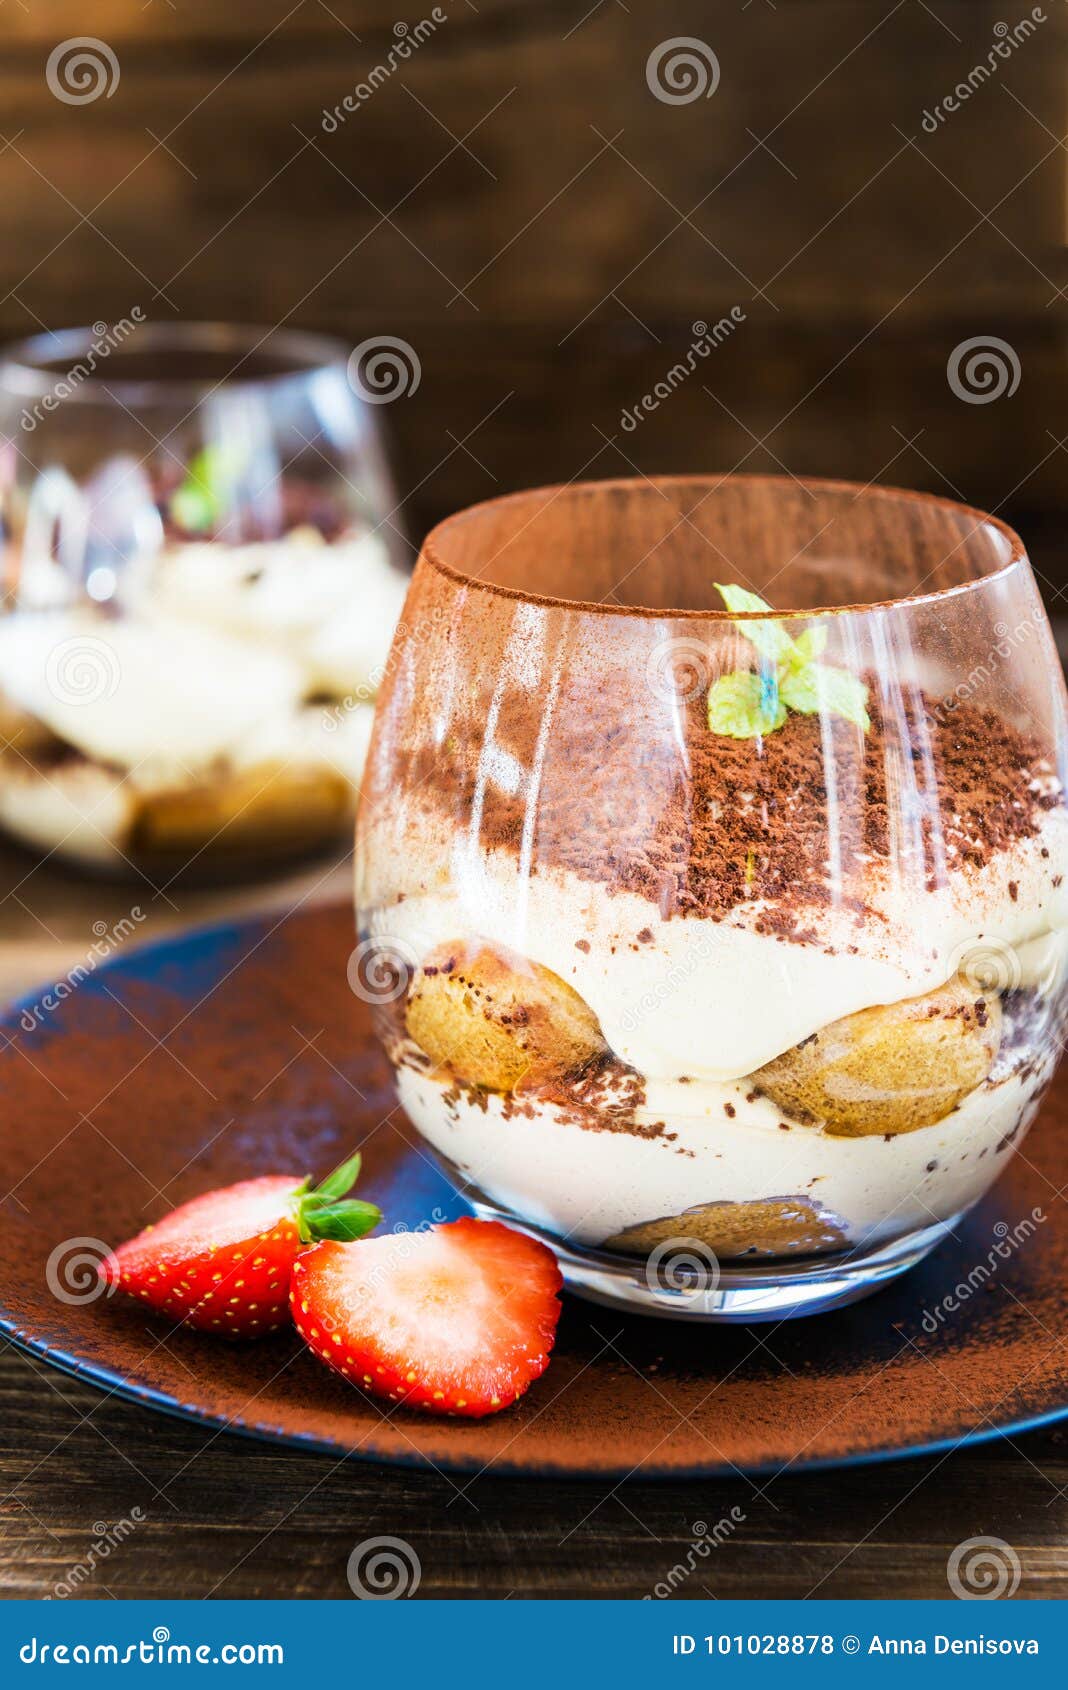 Tiramisu Italien Traditionnel De Dessert Dans Un Pot En Verre Photo stock -  Image du dessert, dîner: 101028878